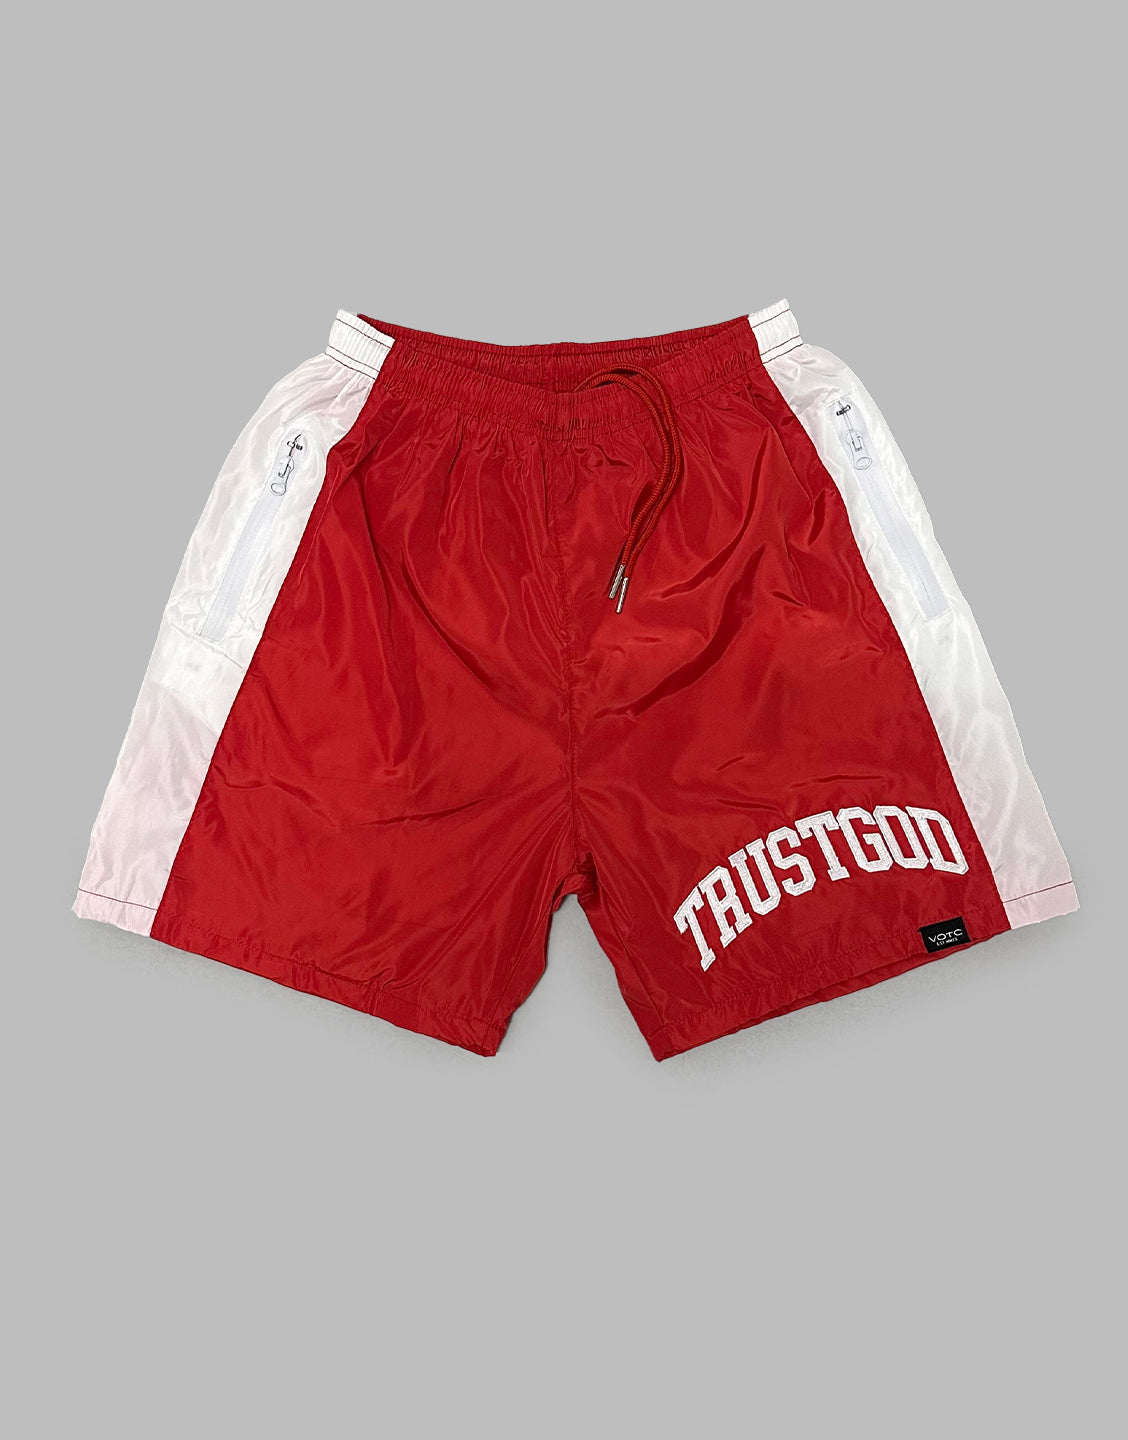 Trust God Windbreaker Shorts - Red - VOTC Clothing